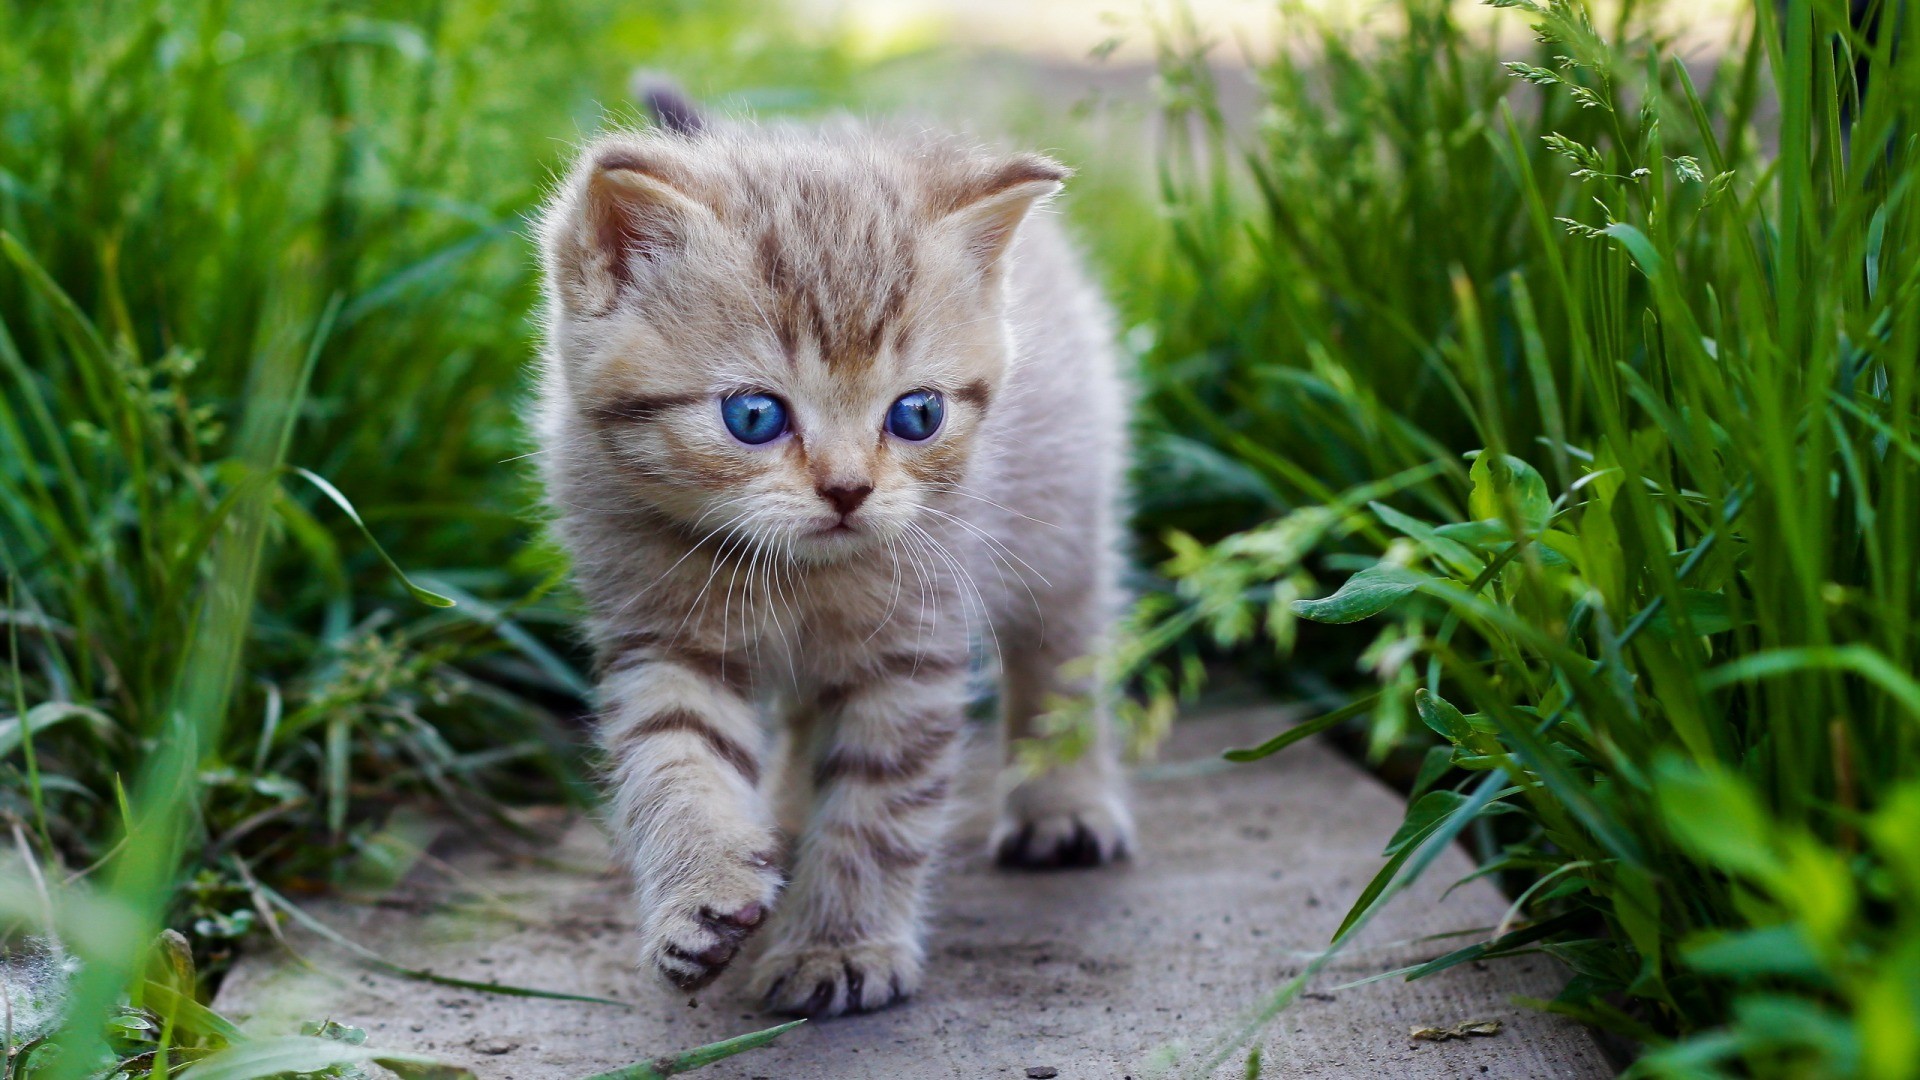 General 1920x1080 cats kittens outdoors blue eyes grass plants animals animal eyes mammals feline